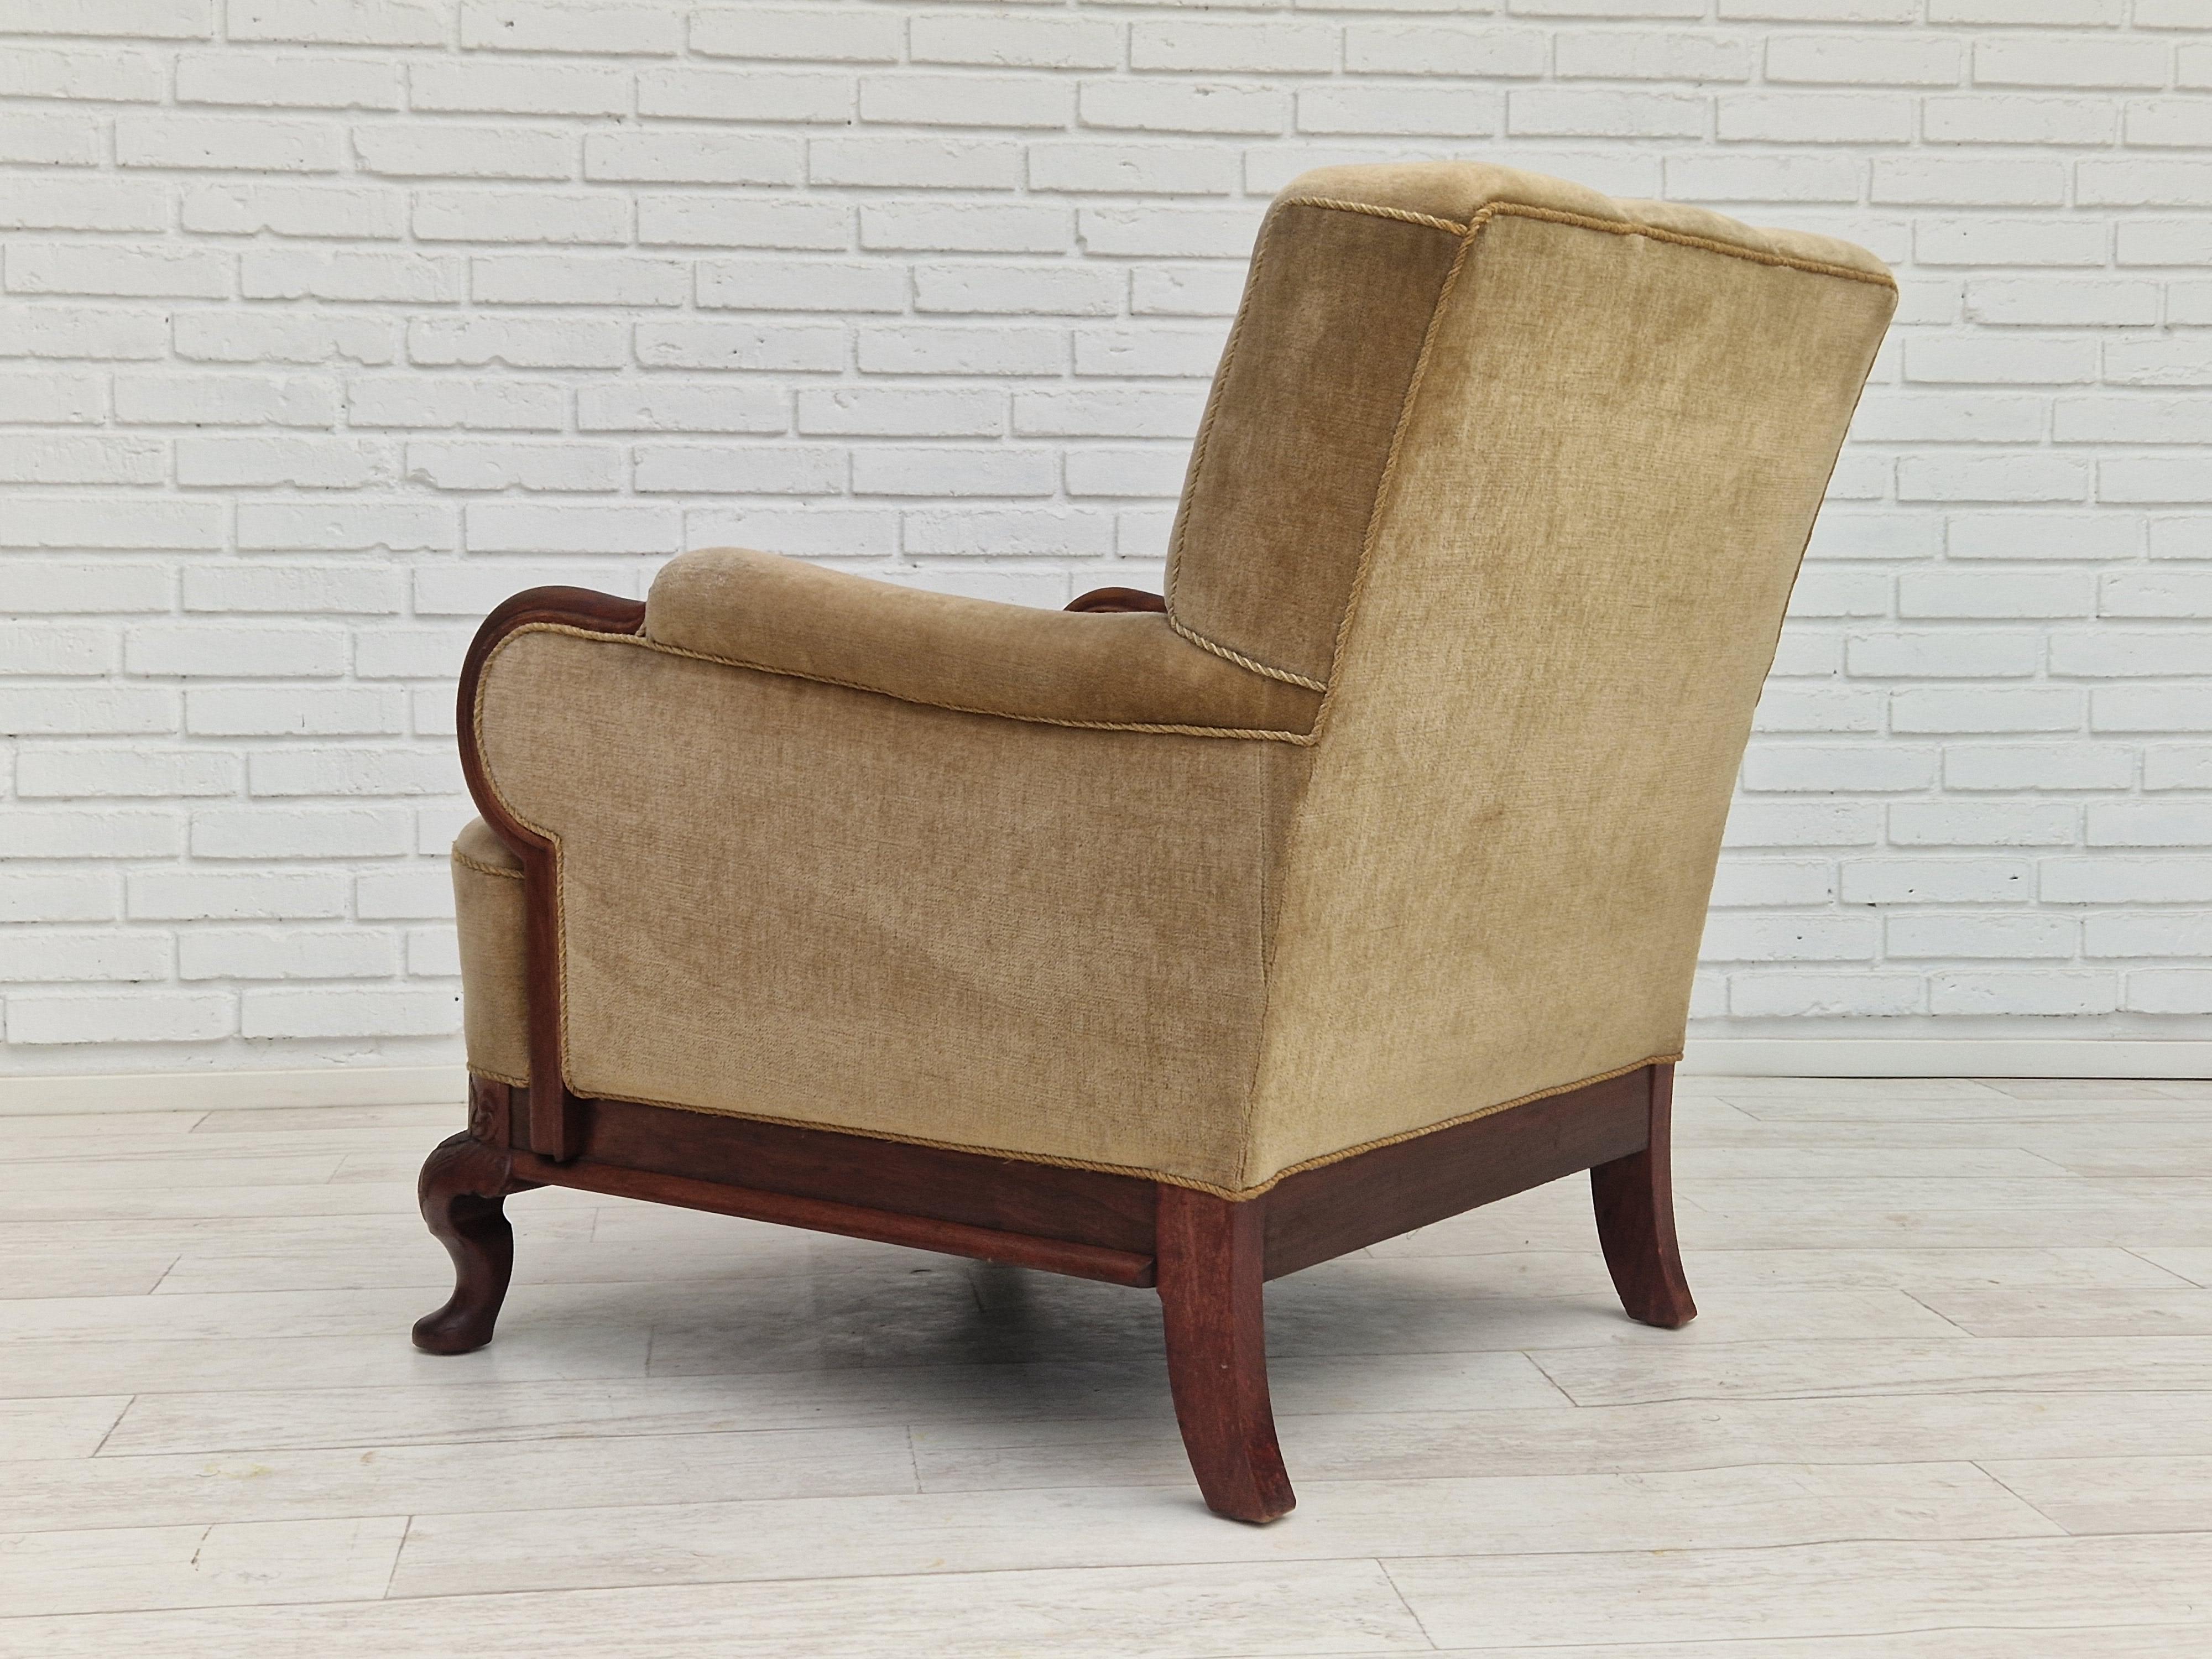 1950s, Danish Design, Set of Armchairs, Teak Wood, Velour, Original Condition For Sale 1